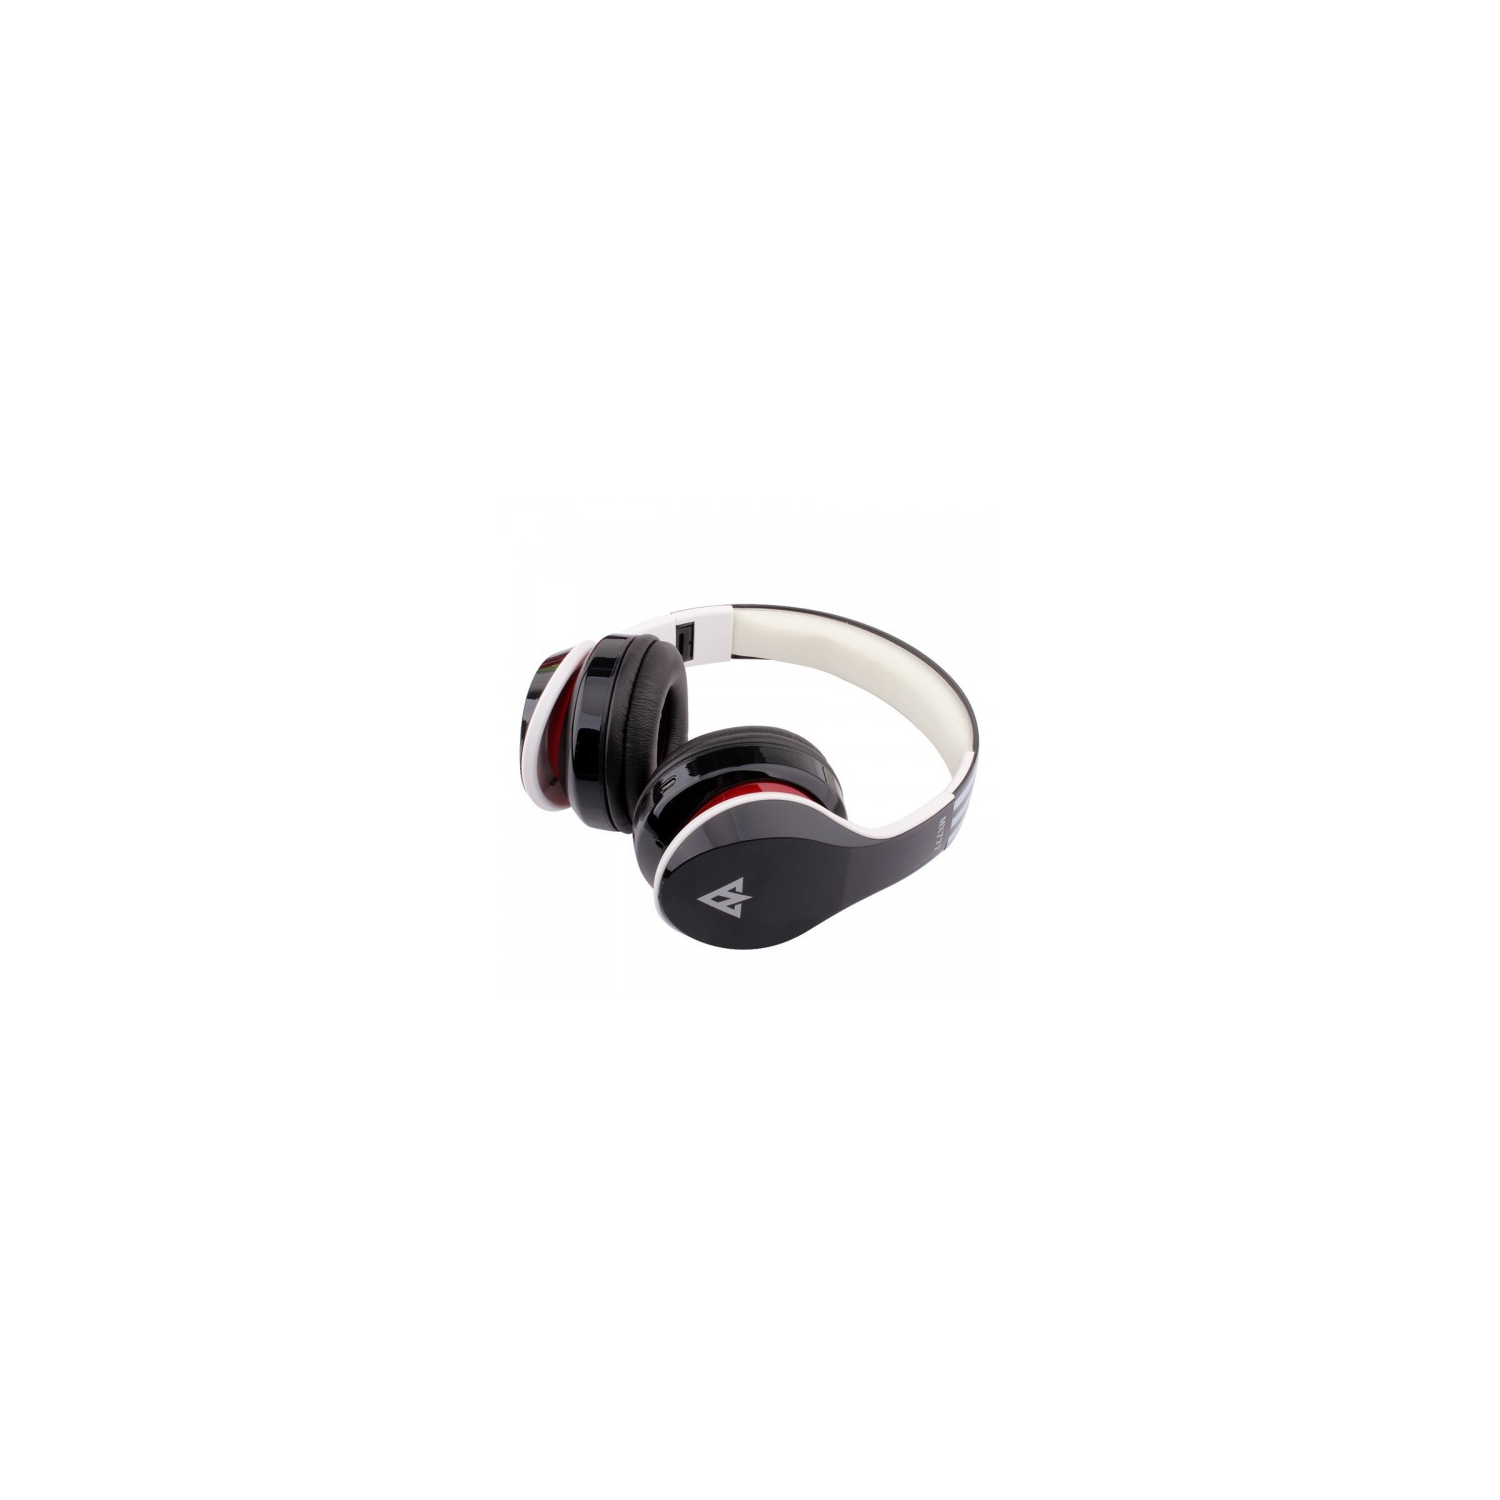 Ovleng MX777 Wireless Bluetooth V4.1 EDR Stereo Rechargeable Headphones